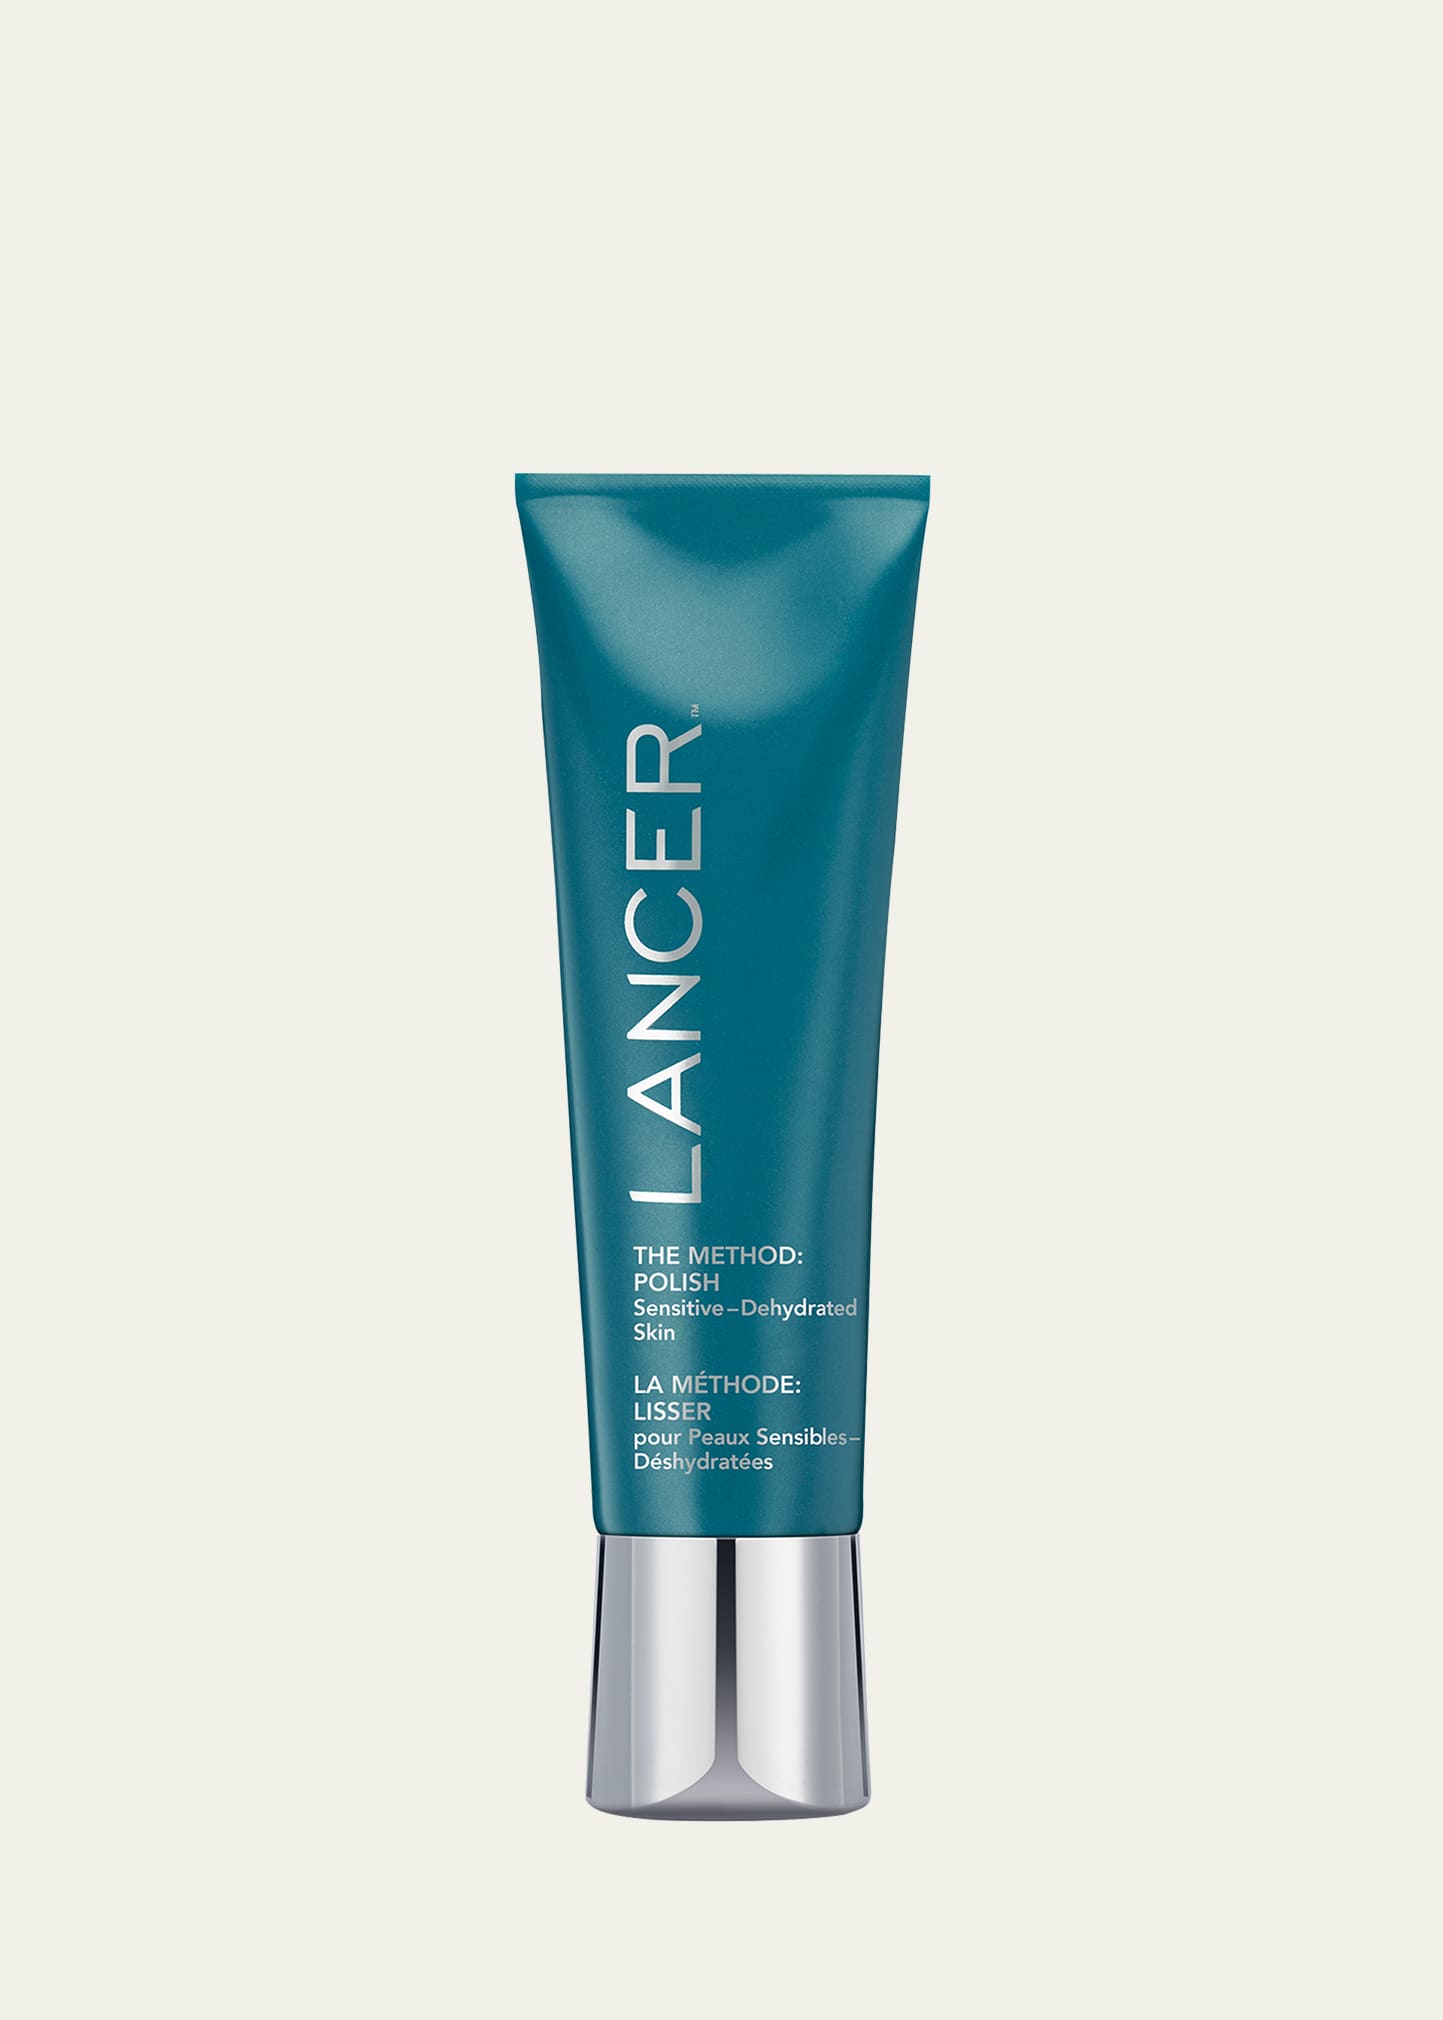 Lancer The Method: Polish Sensitive-Dehydrated Skin, 4.2 oz.